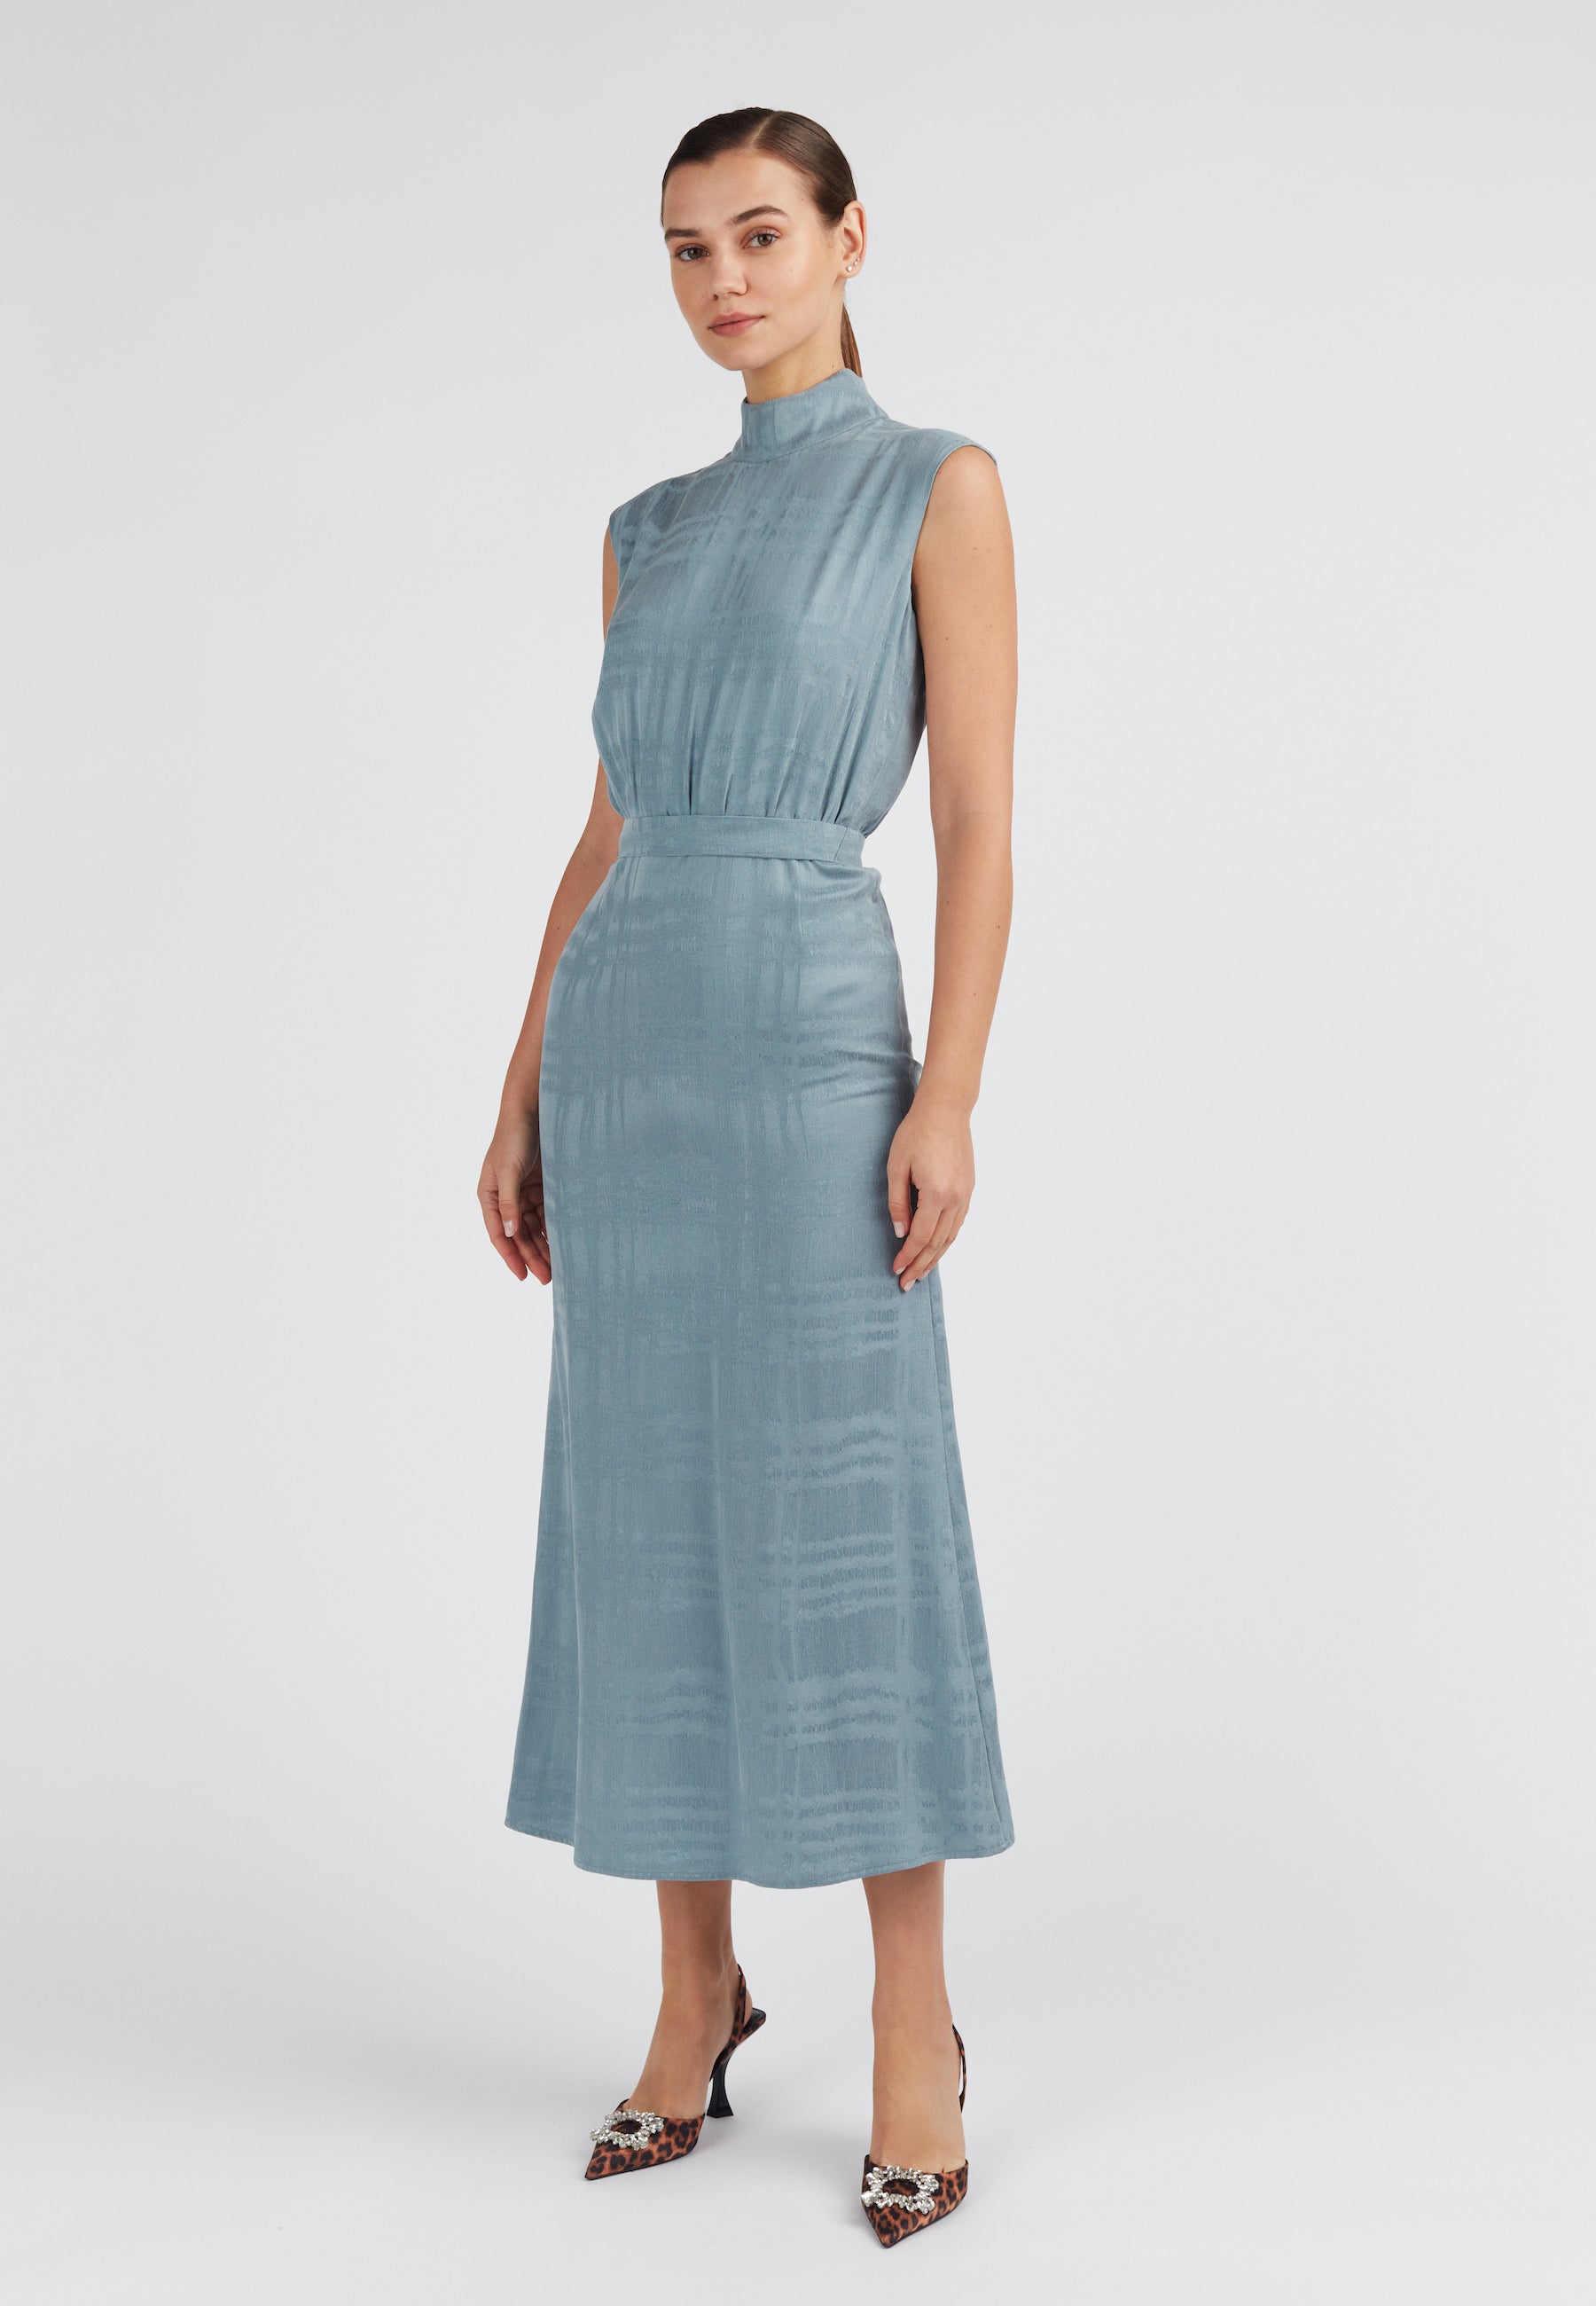 Elegant Stone blue turtleneck dress